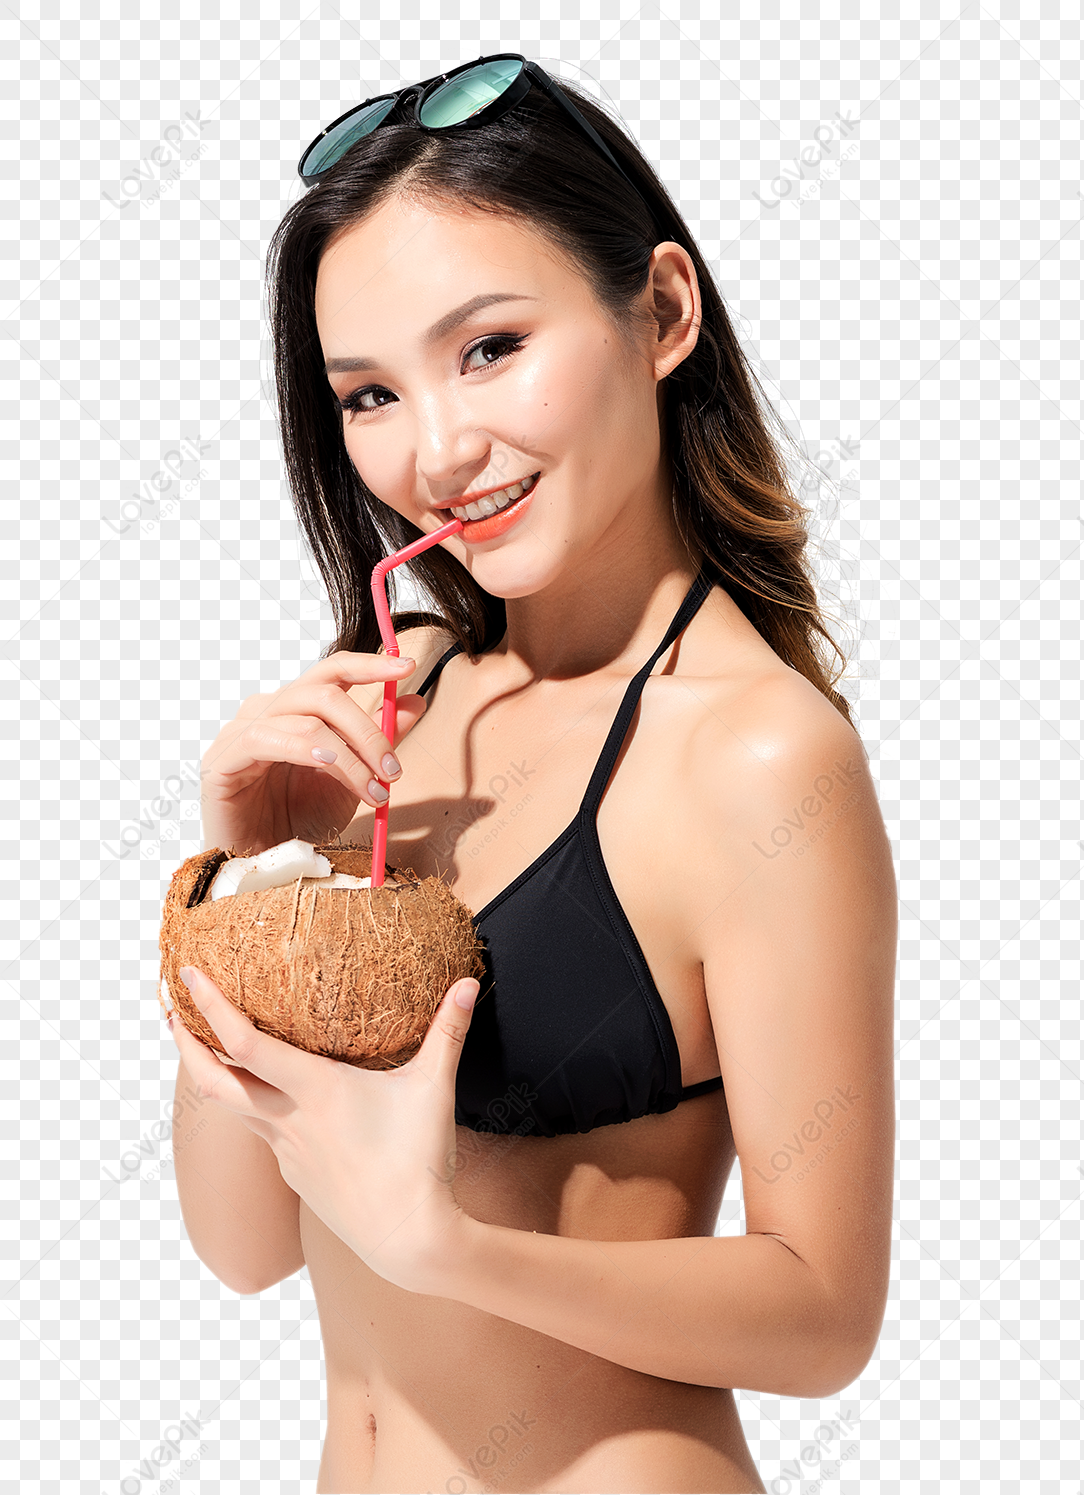 Black Bikini Swimsuit Drinks Coconut Milk, Drinking Straw, Water